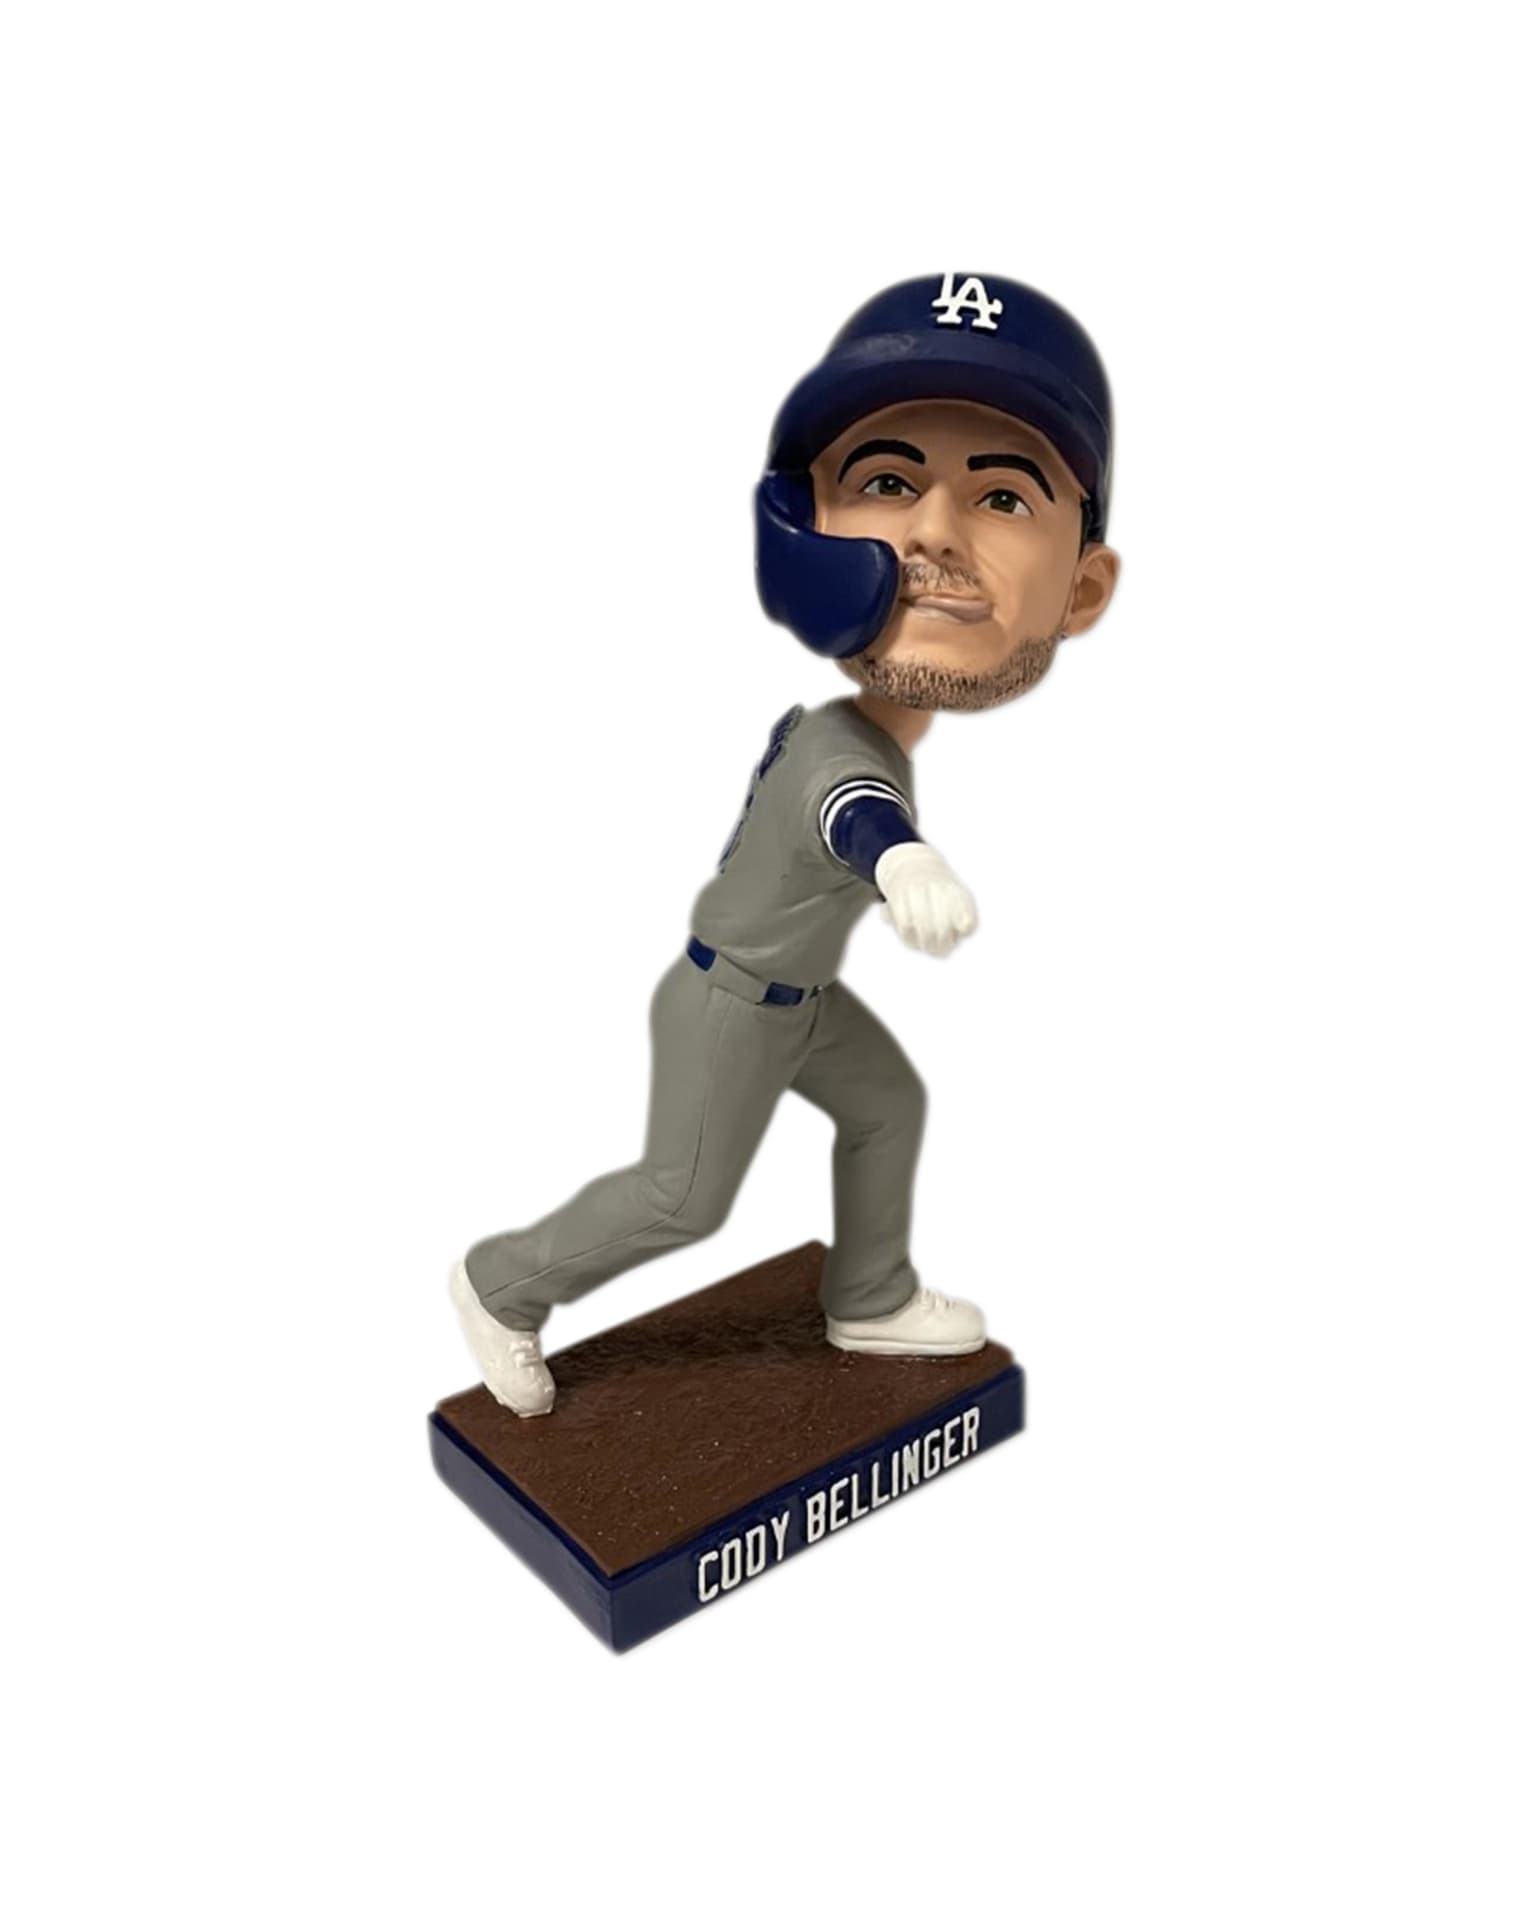 LA Dodgers Cody Bellinger Bobblehead, 06/24/21 Stadium Giveaway, New In Box